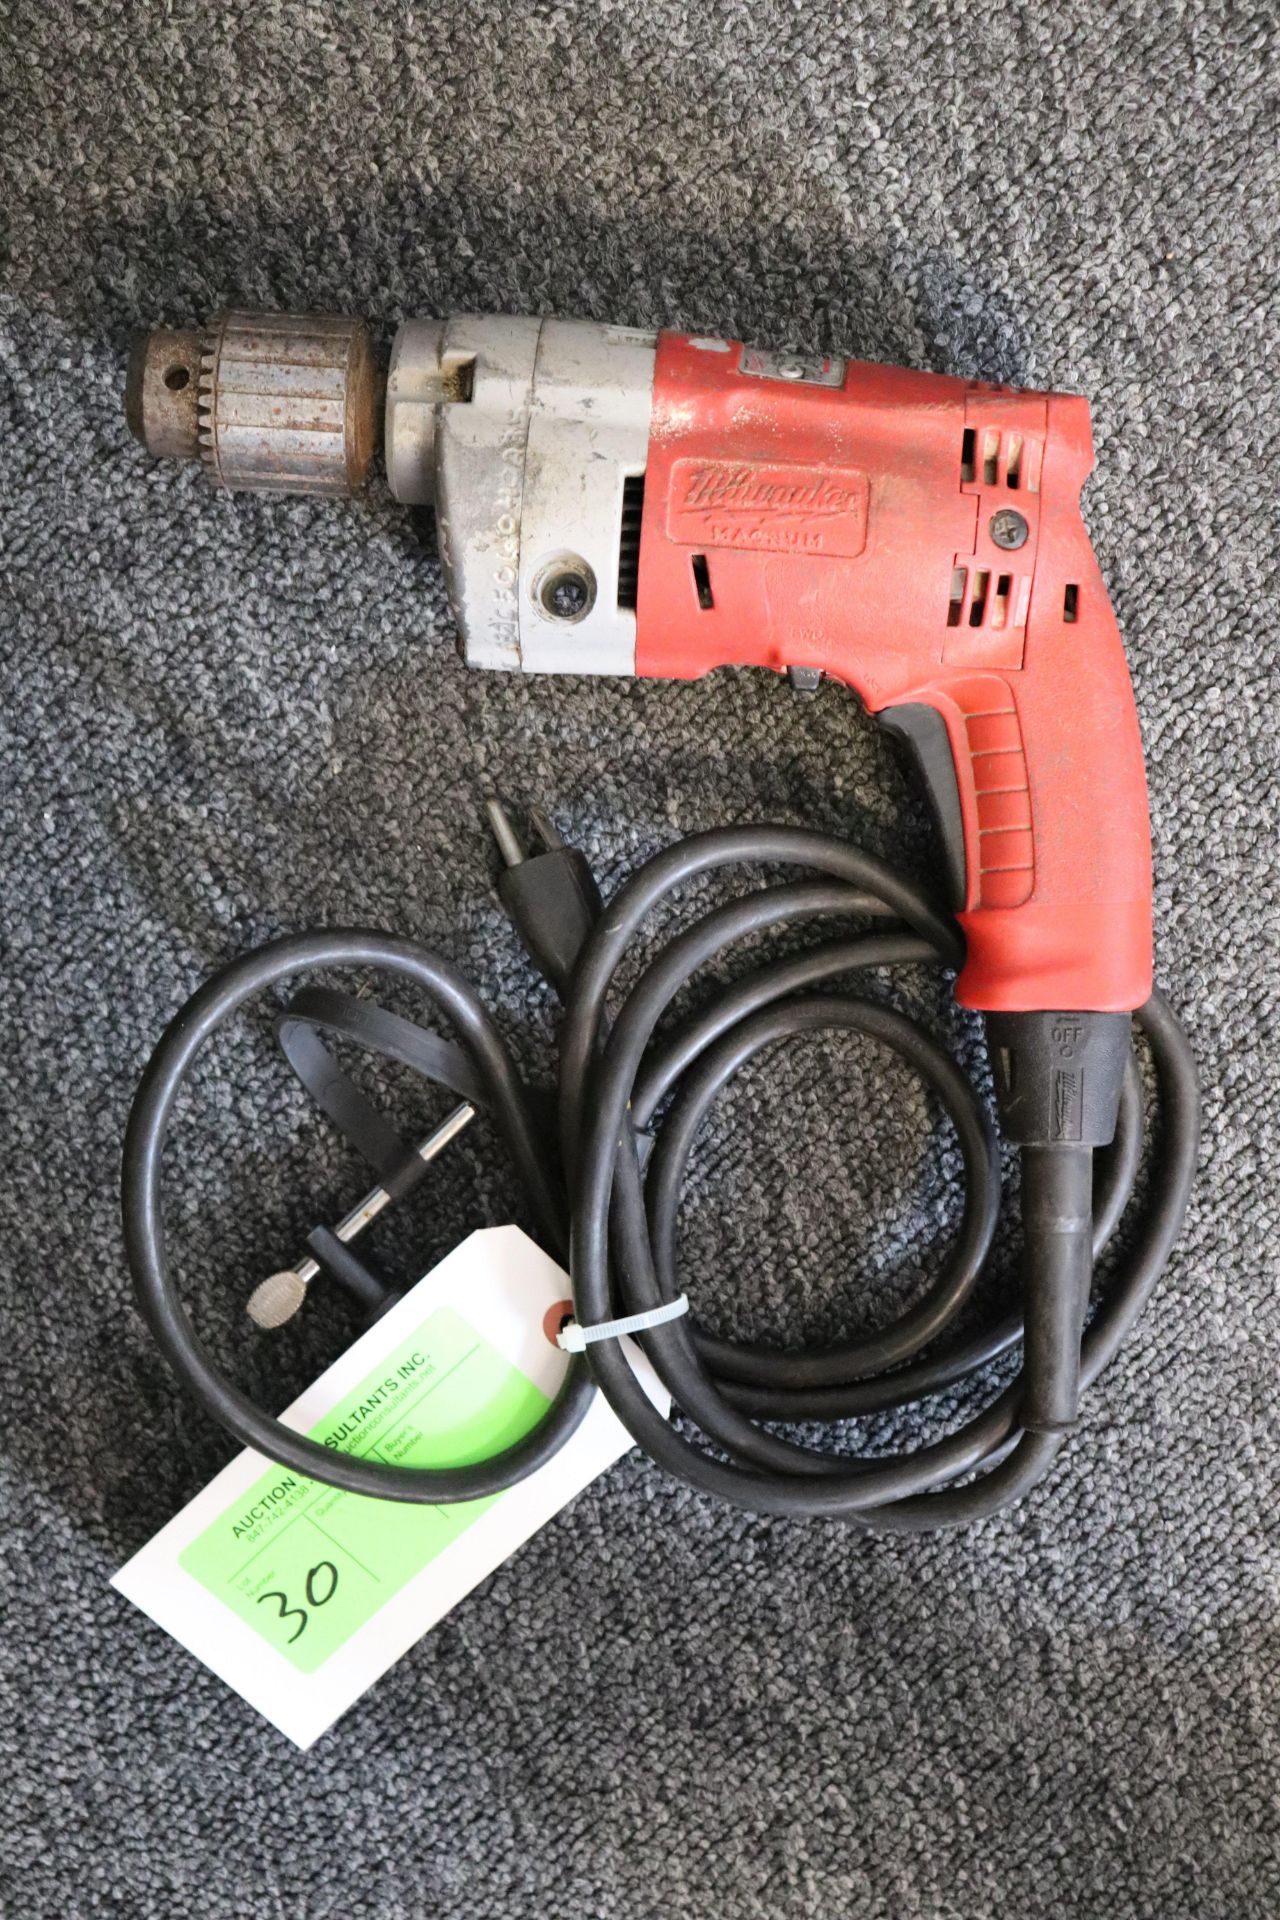 Milwaukee 1/2" electric drill